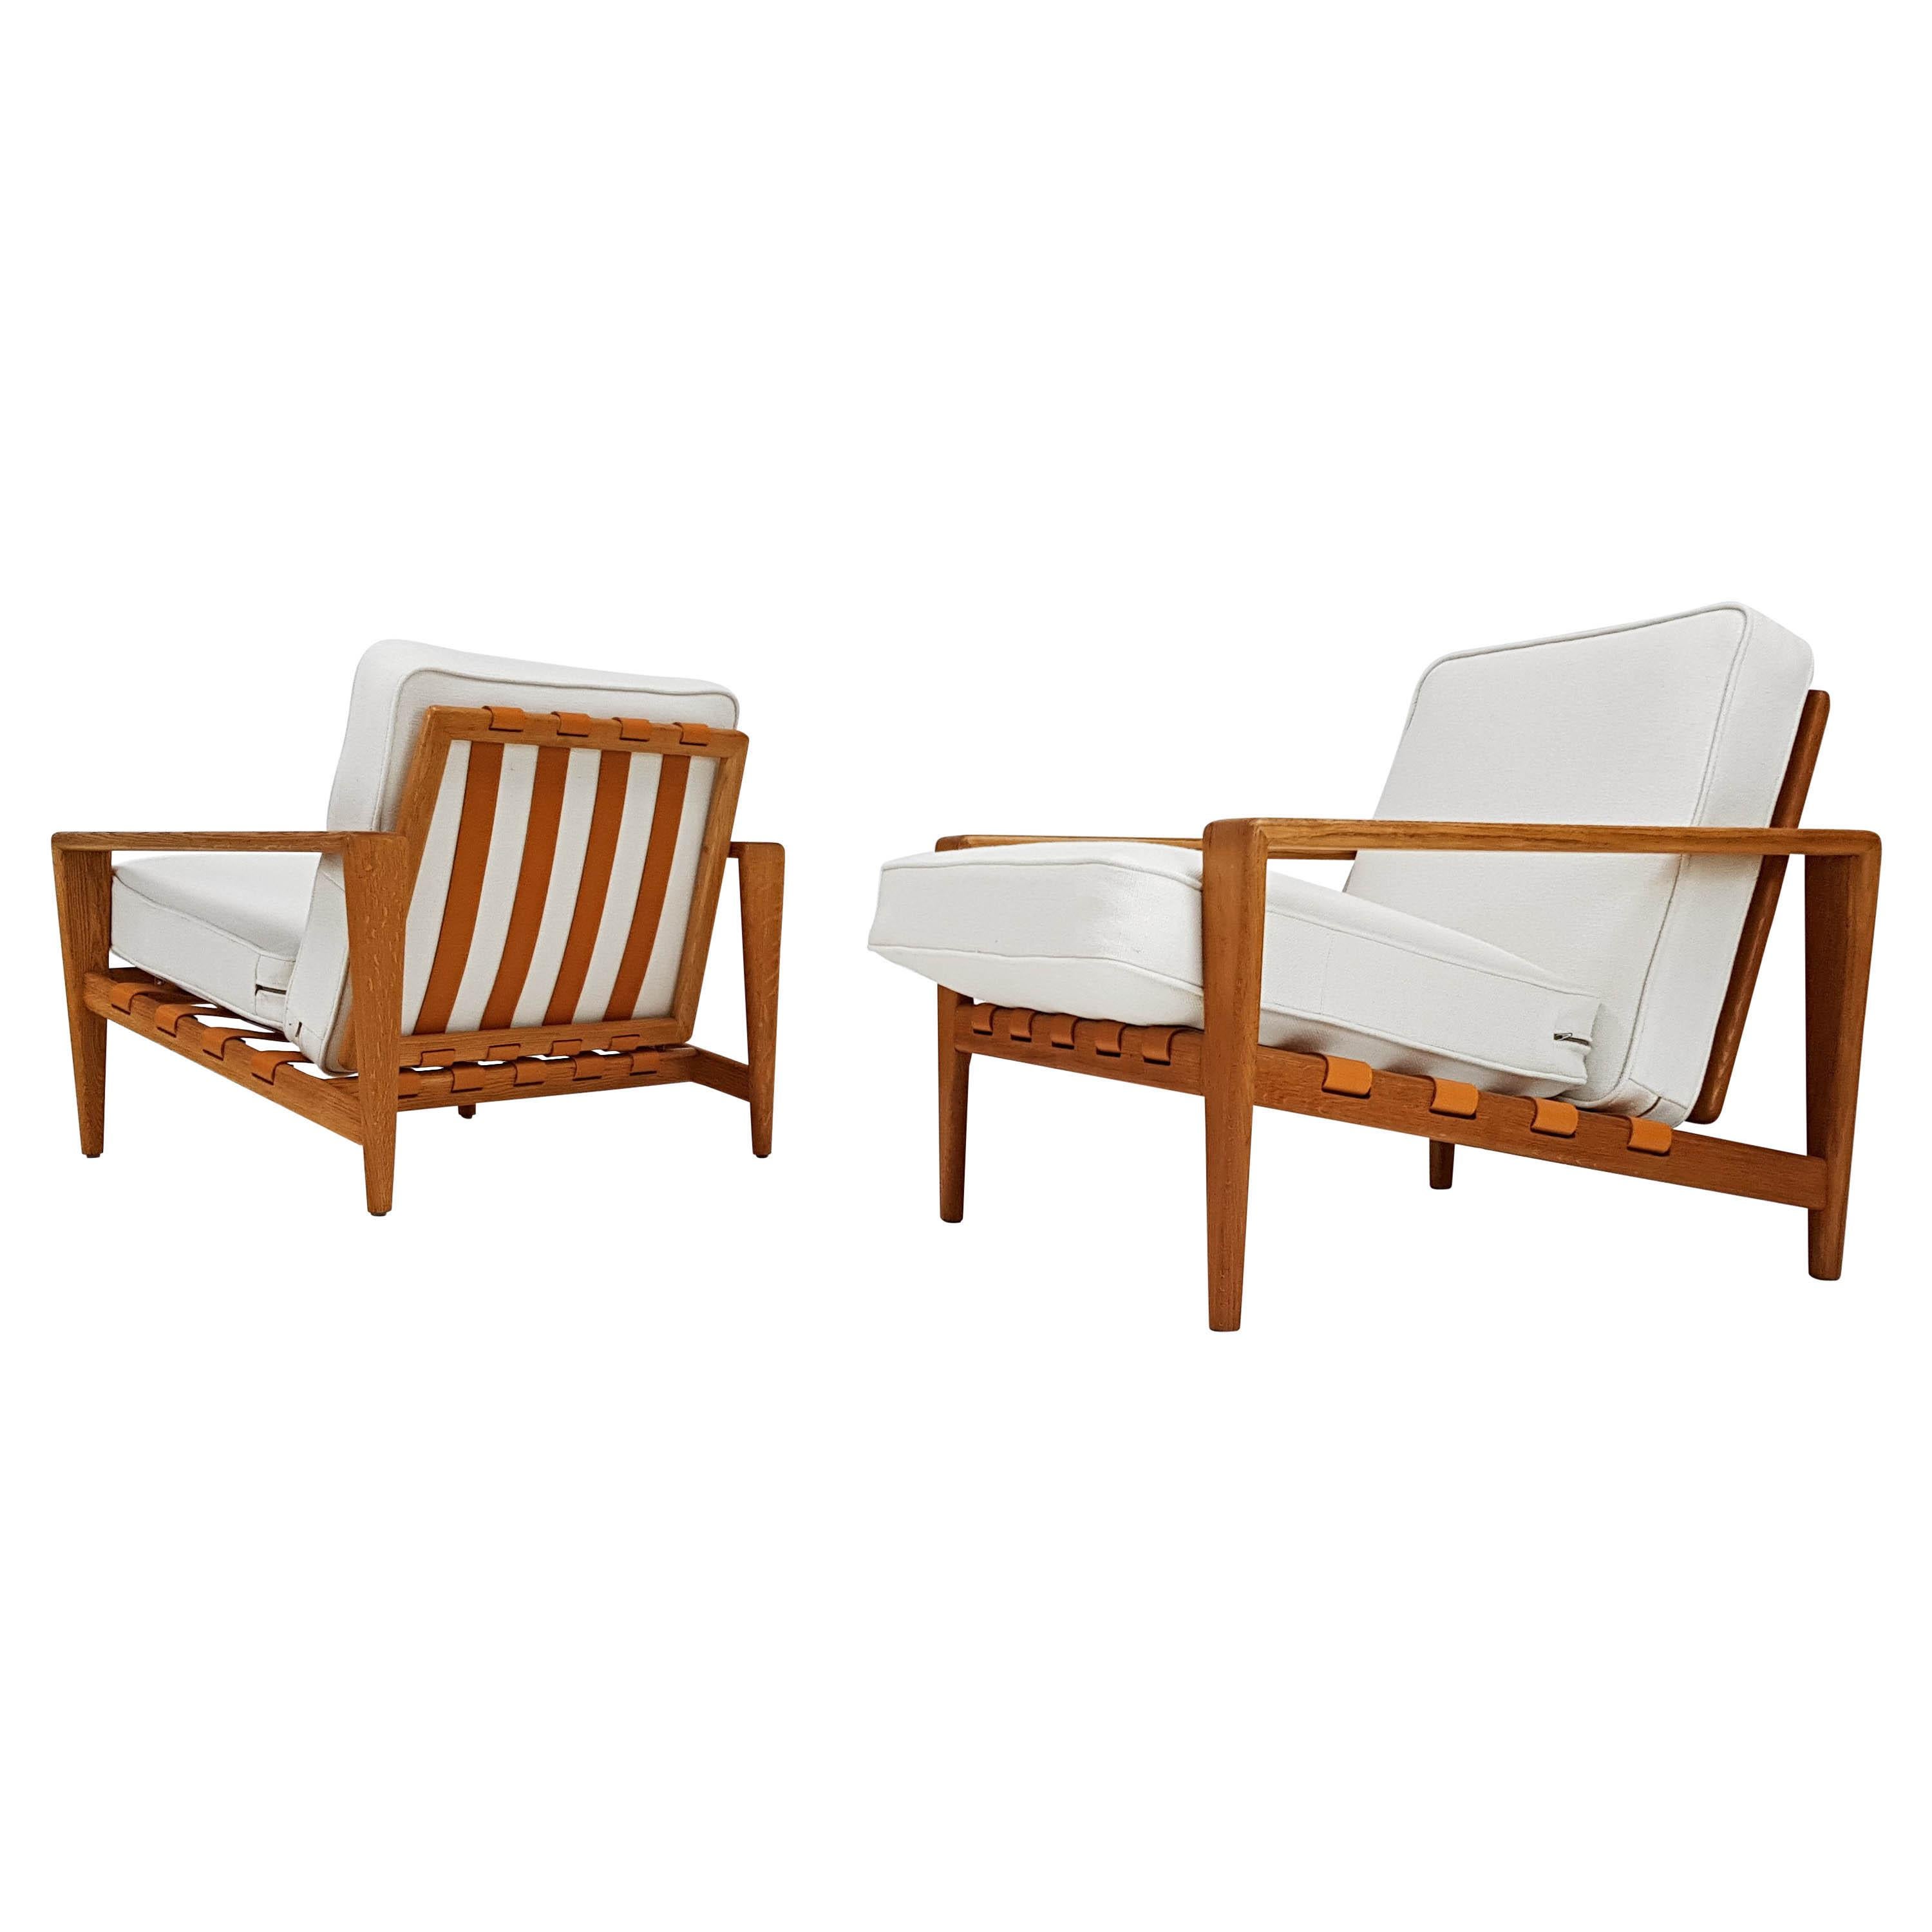 "Bodö" Lounge Chairs by Svante Skogh for Seffle Möbelfabrik in Kvadrat Fabric